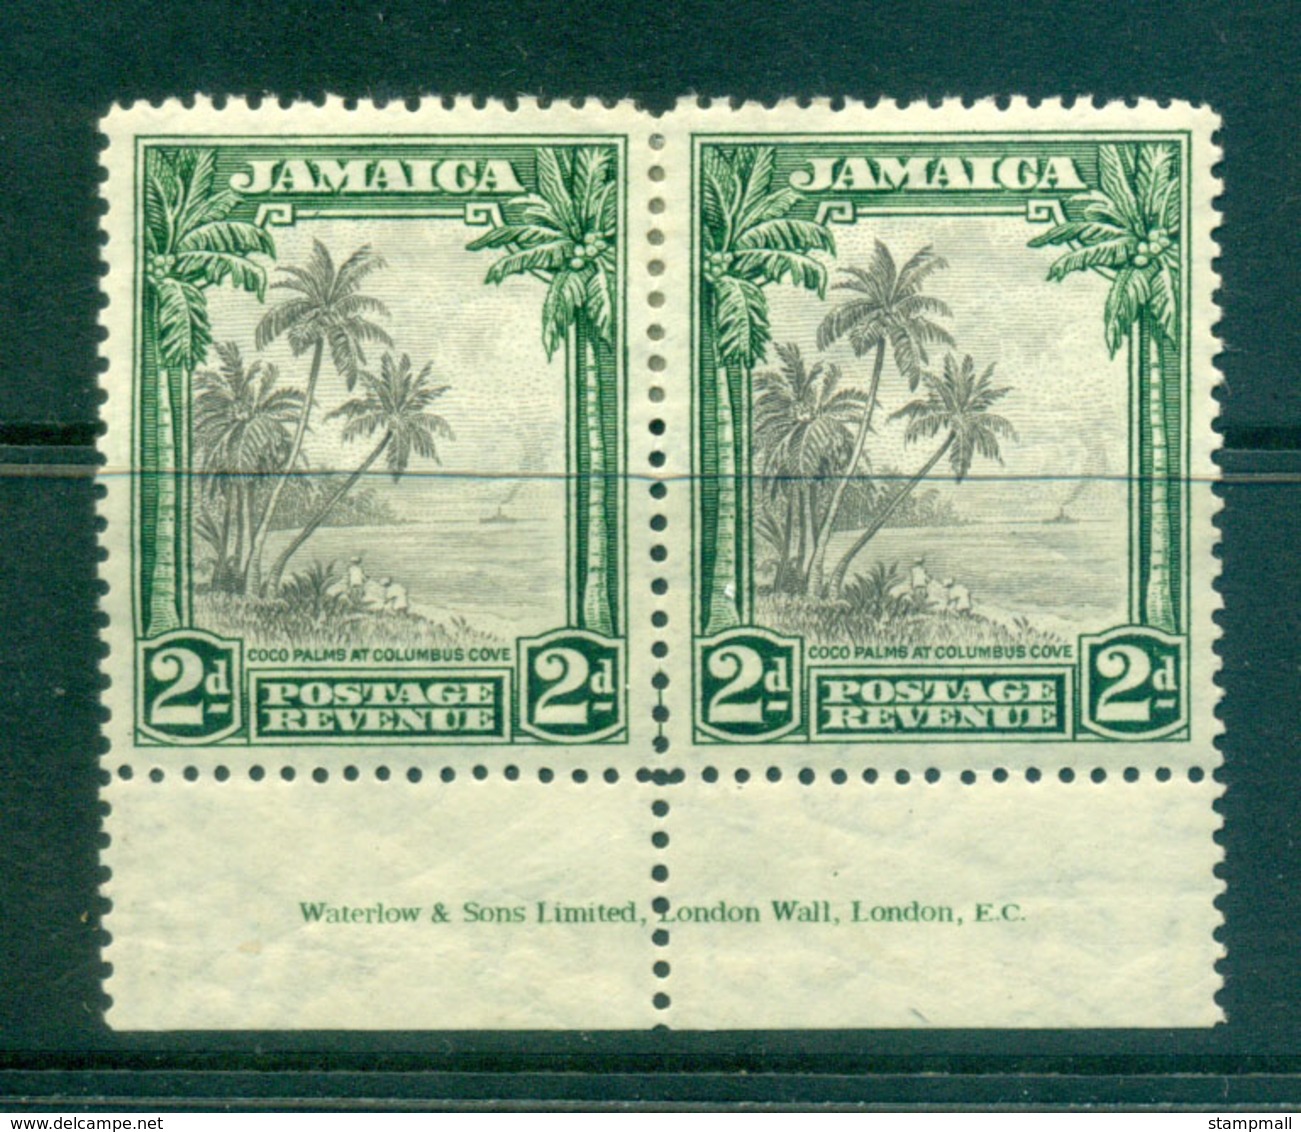 Jamaica 1934 2d Coco Palms At Columbus Cove Imprint Pair MLH Lot55201 - Jamaica (1962-...)